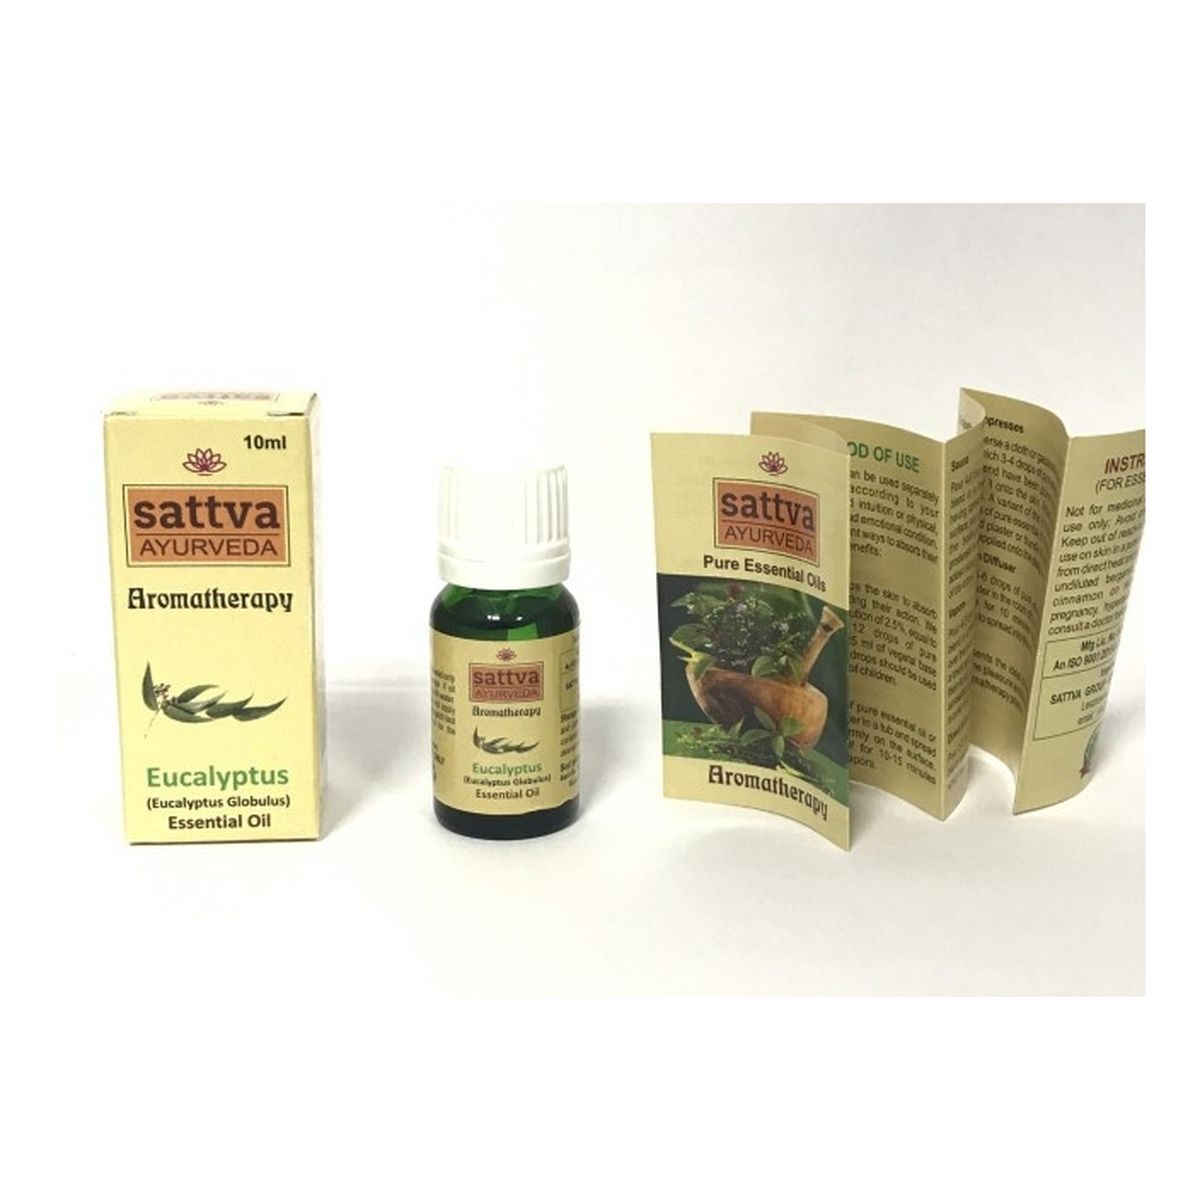 Sattva Aromatherapy Essential Oil Aromatherapy Olejek Eteryczny Eukaliptusowy 10ml